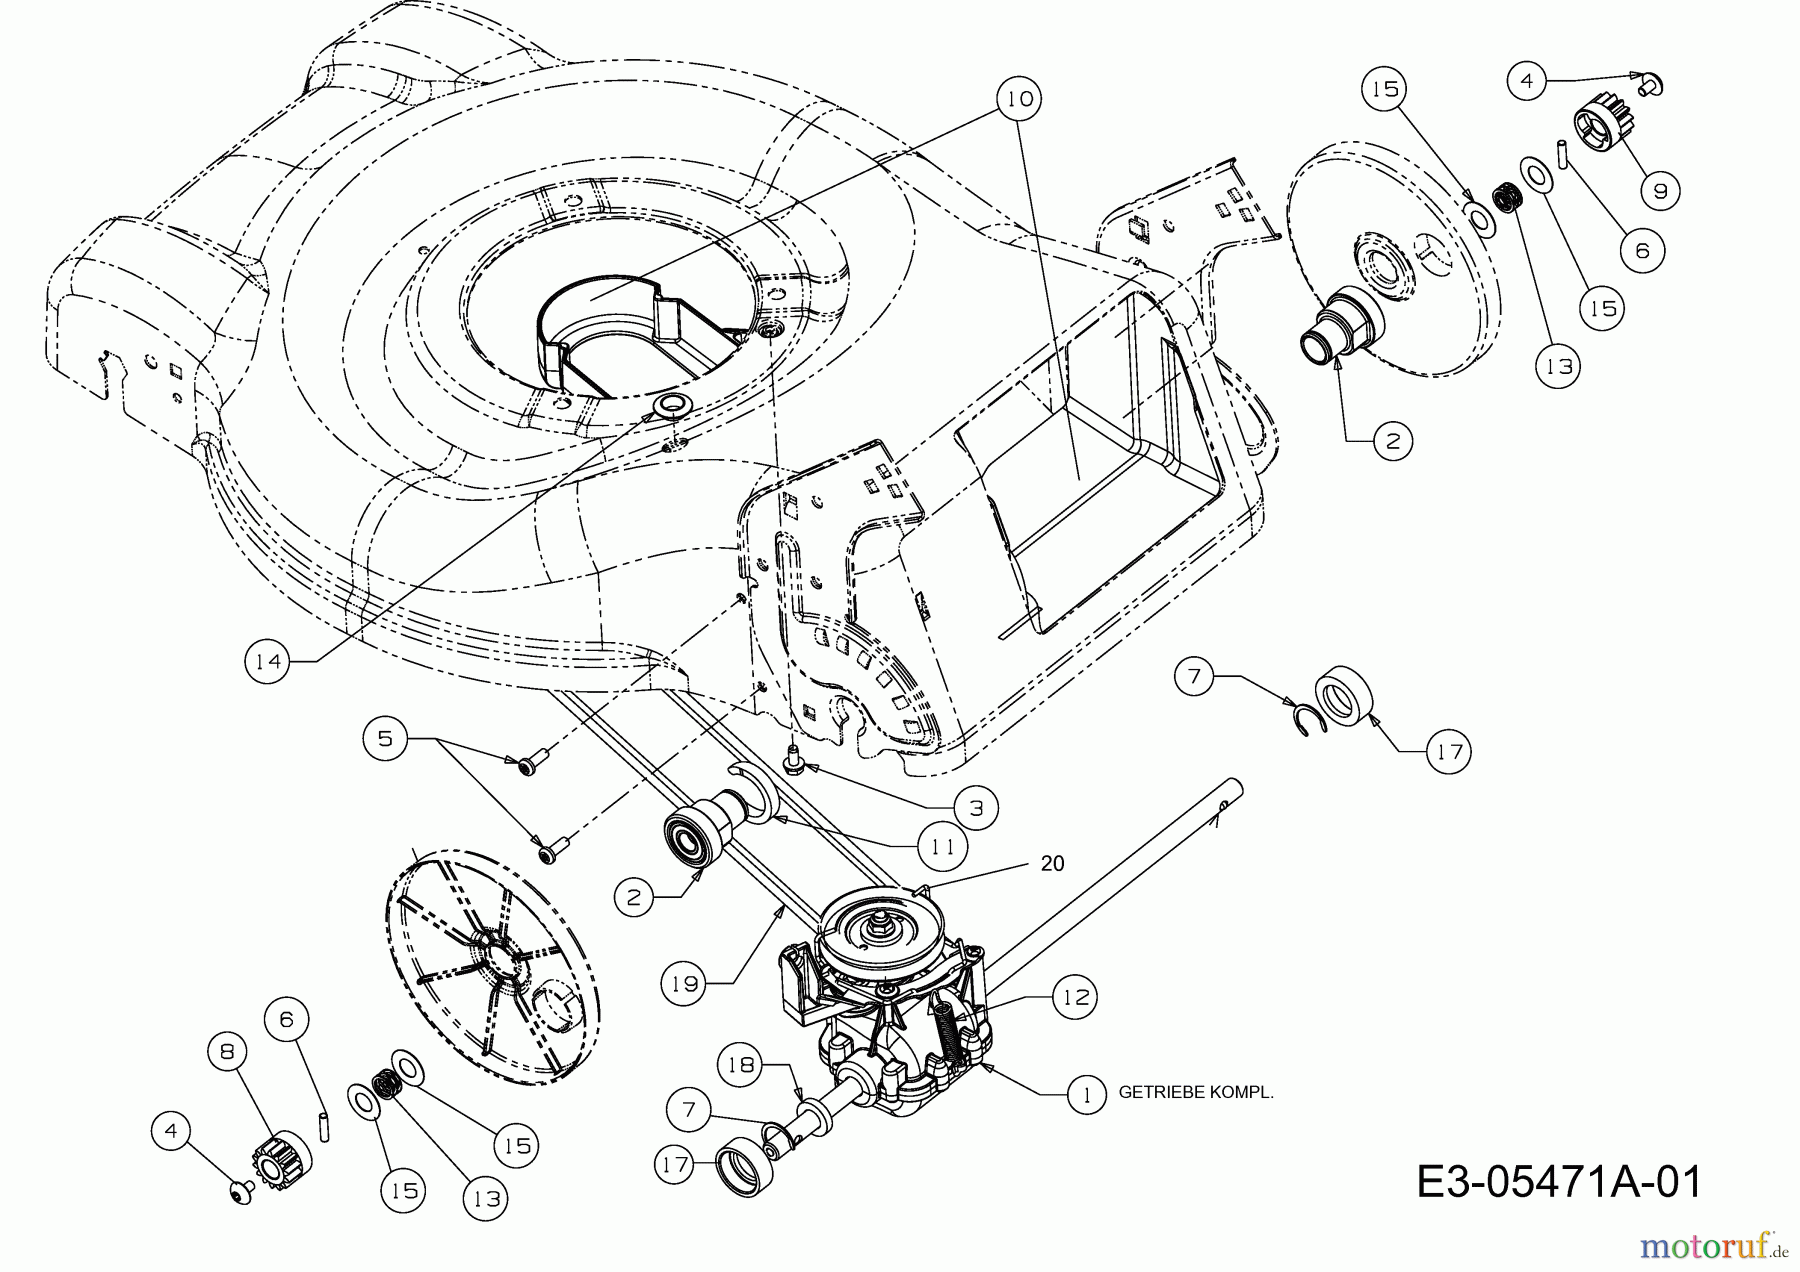  MTD Motormäher mit Antrieb 46 SPOE 12FEJ5M4600  (2010) Getriebe